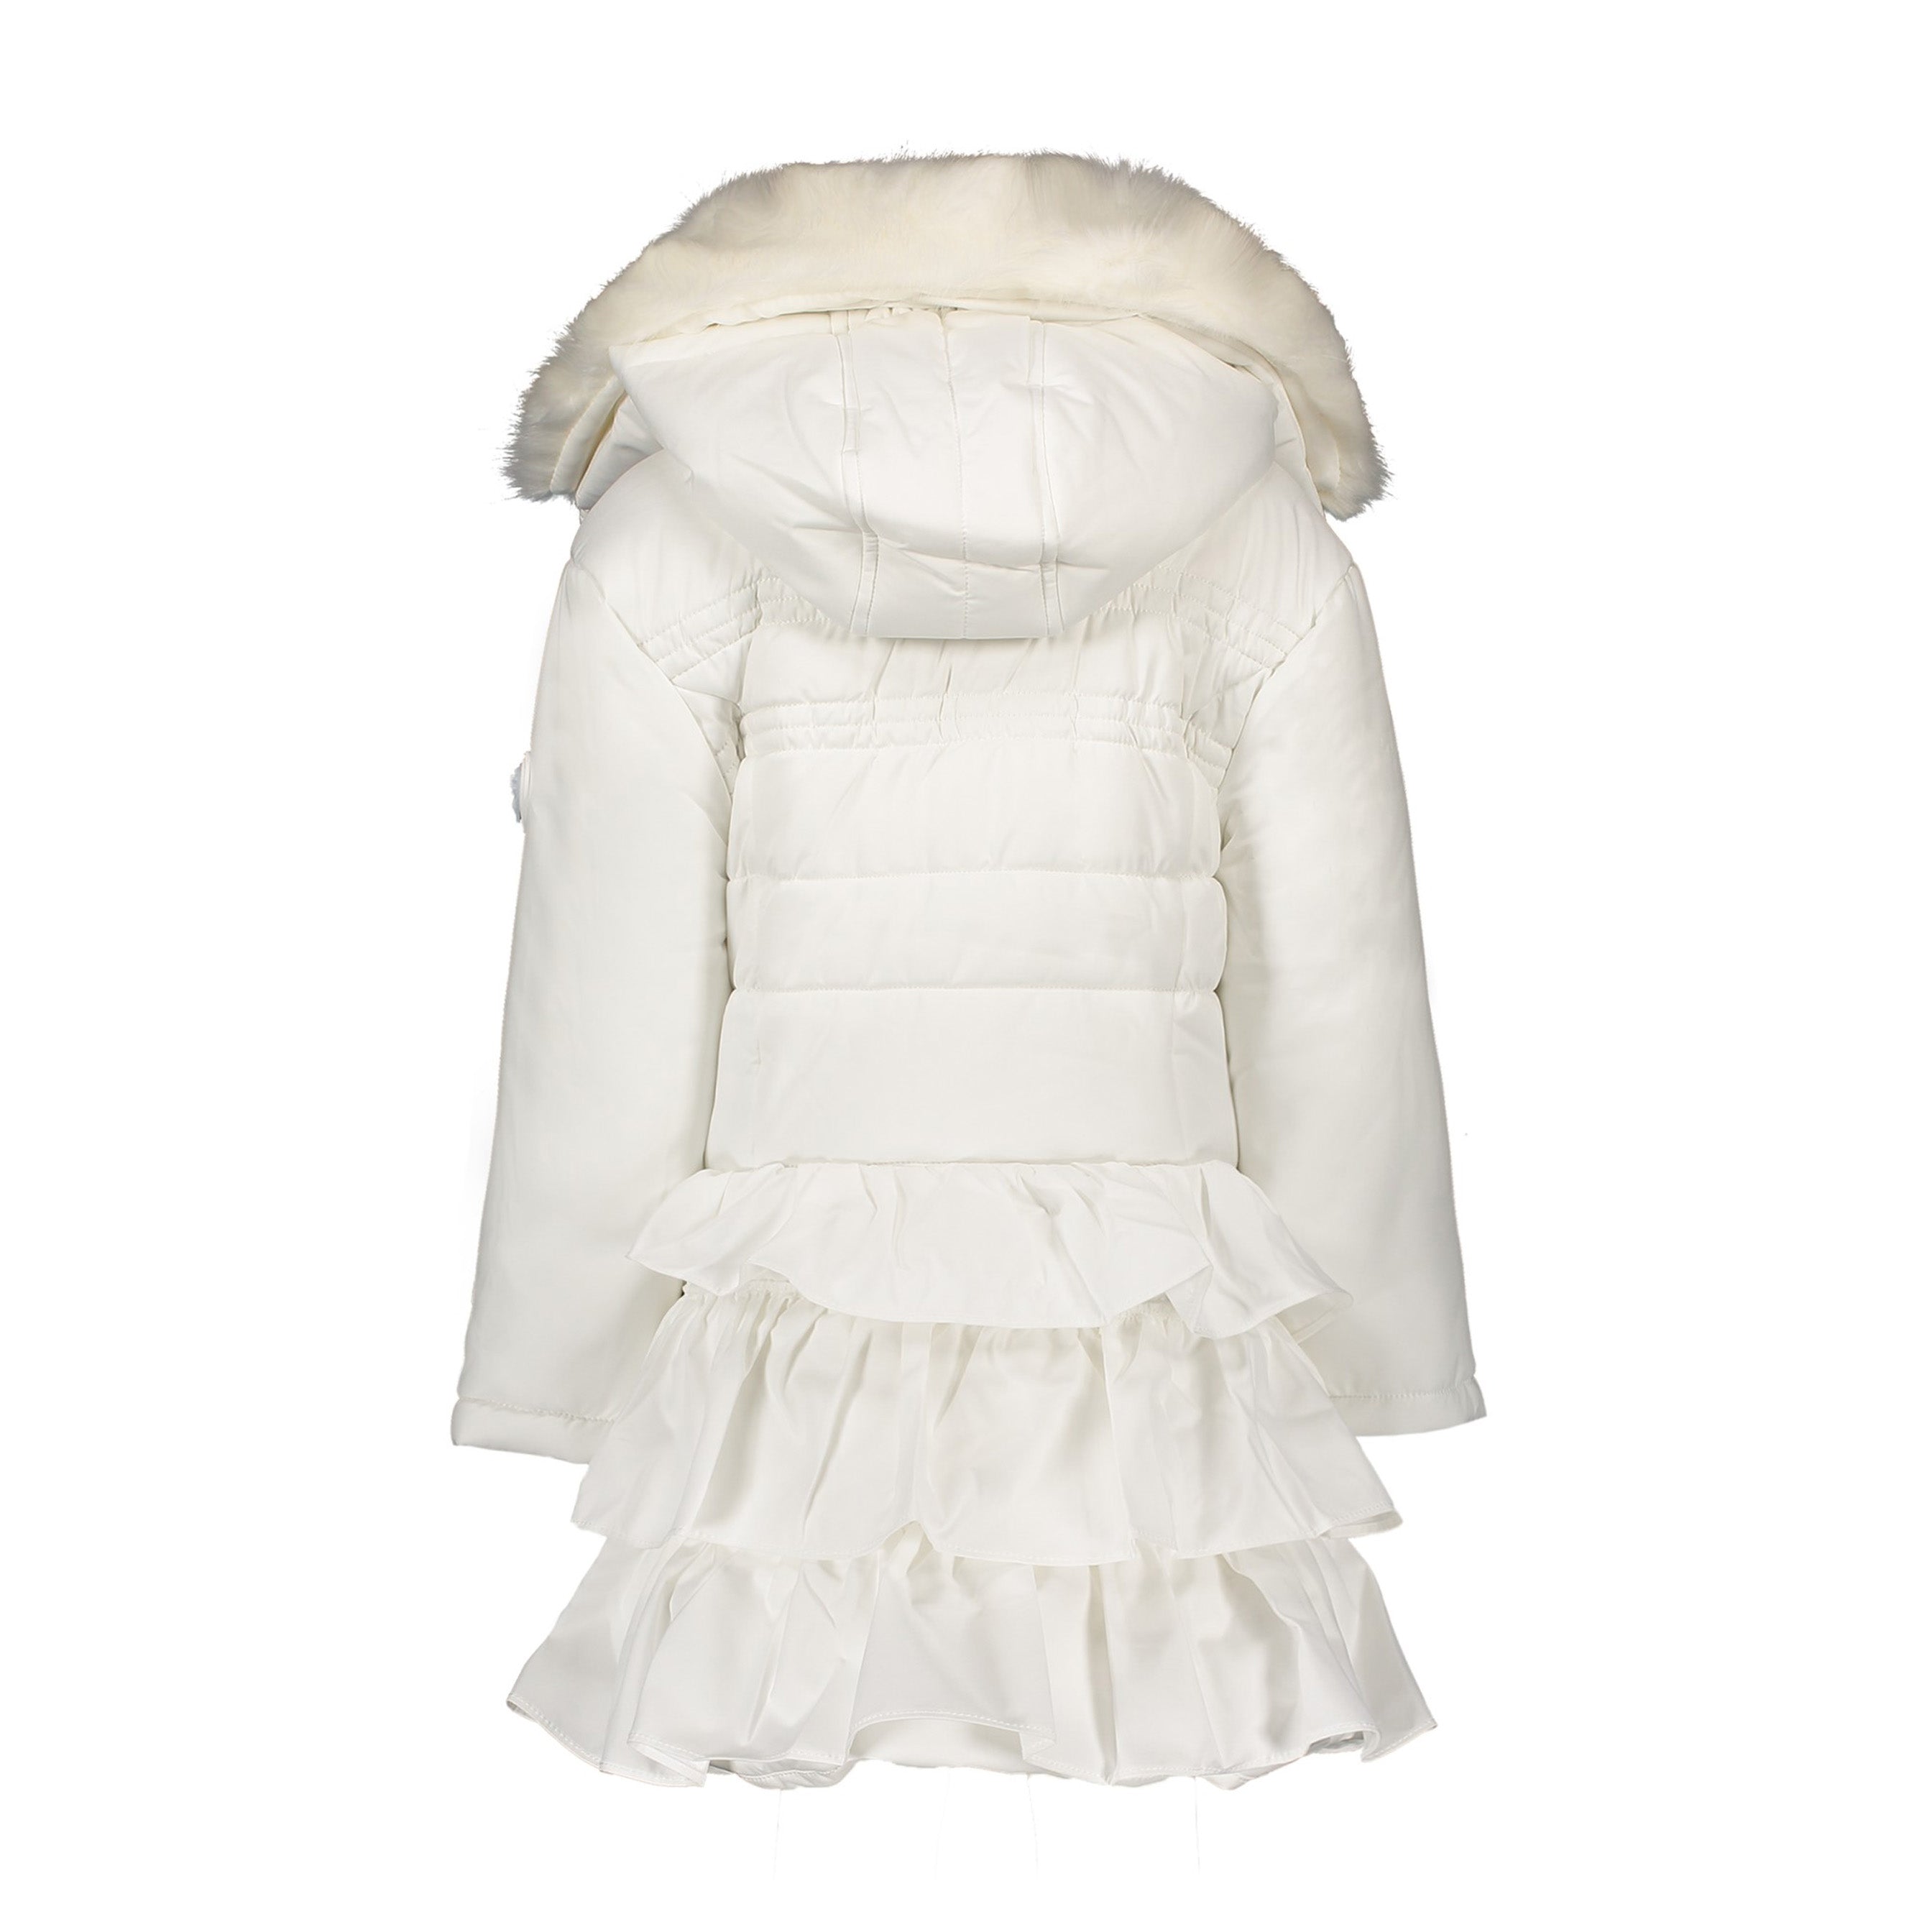 Le Chic Baby Girls White Coat